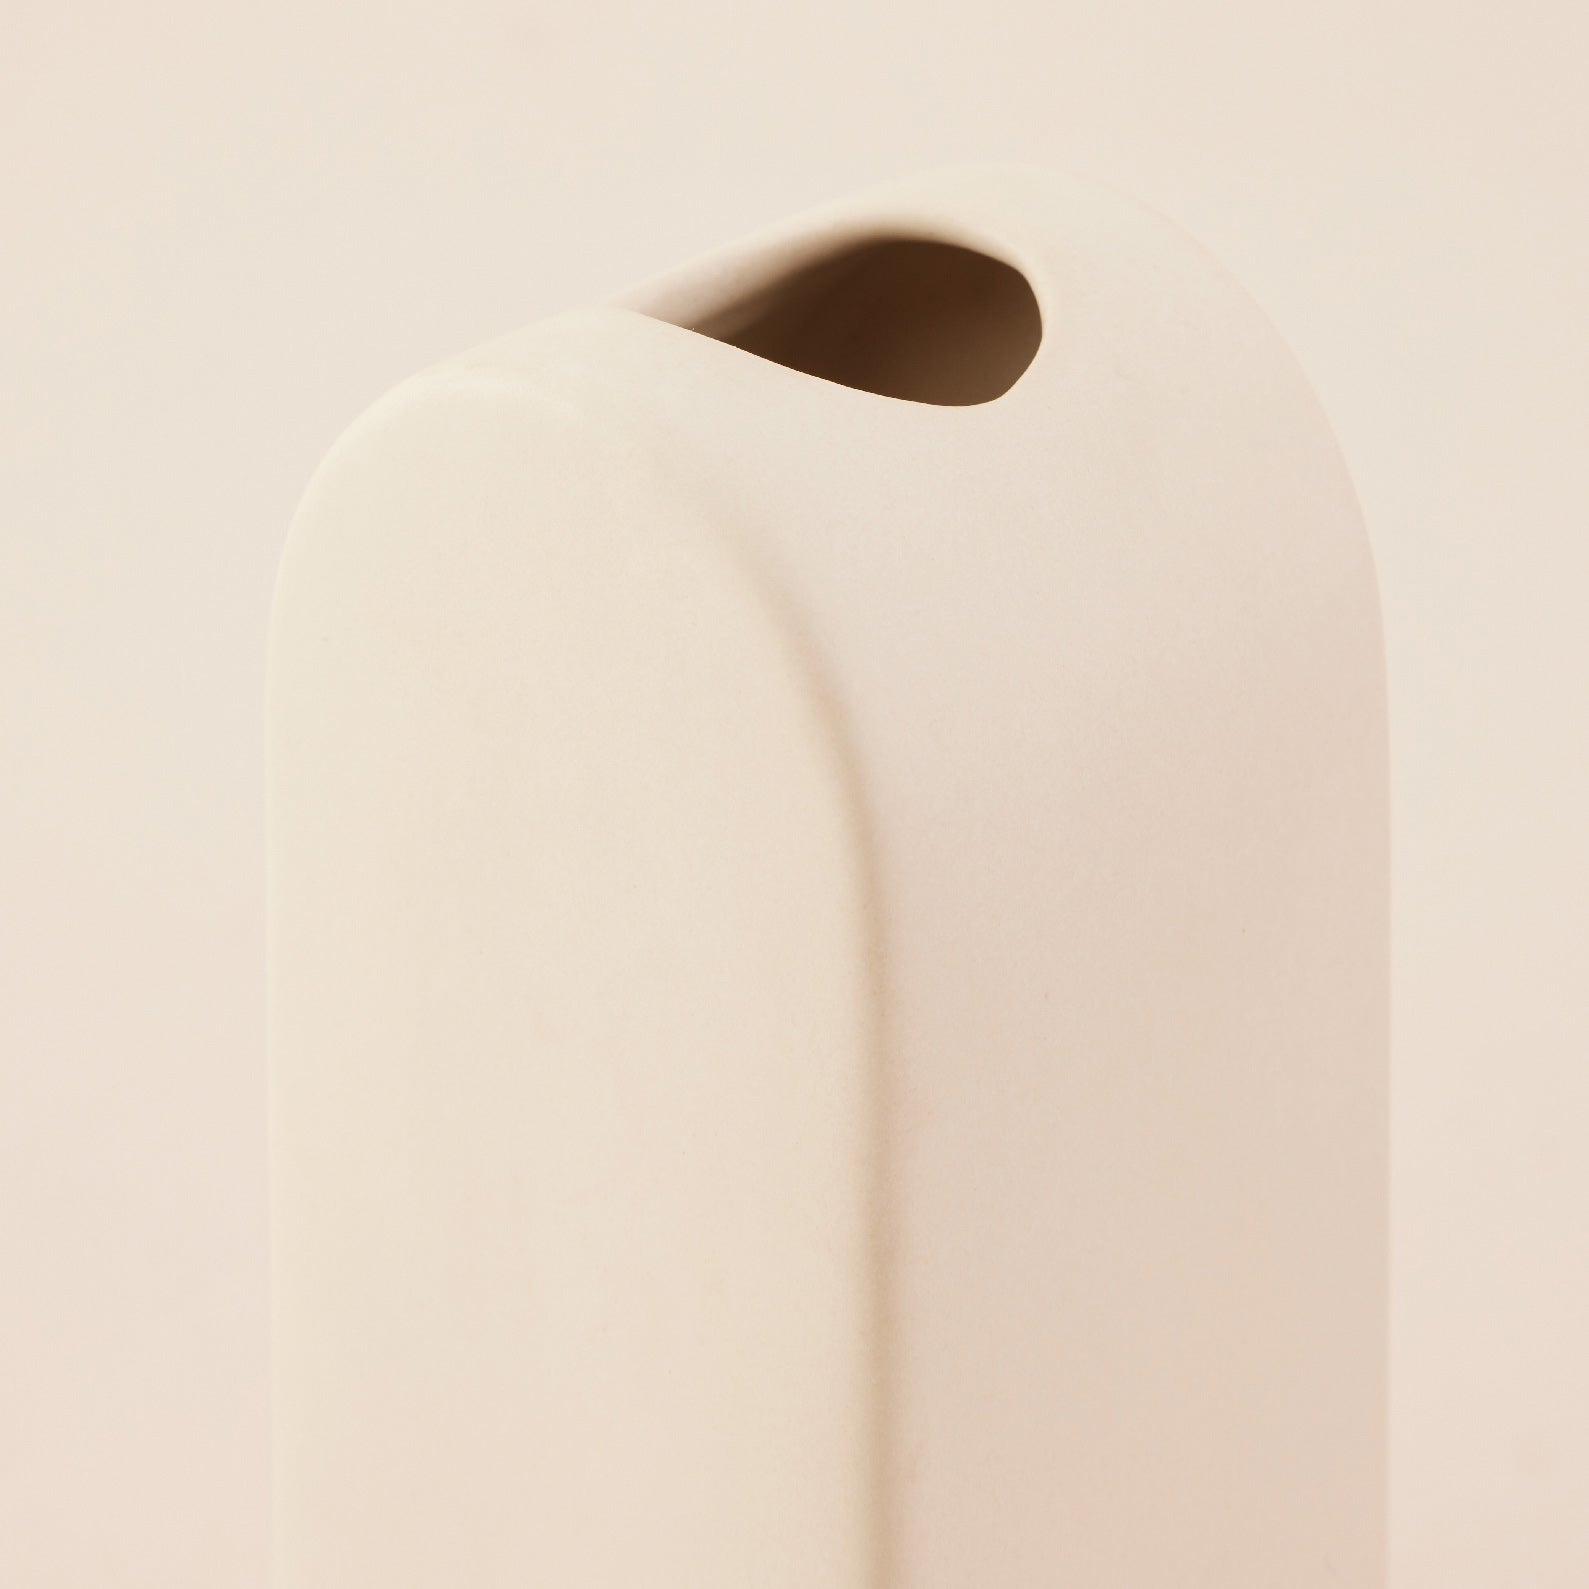 White Arch Ceramic Vase | แจกัน เซรามิก